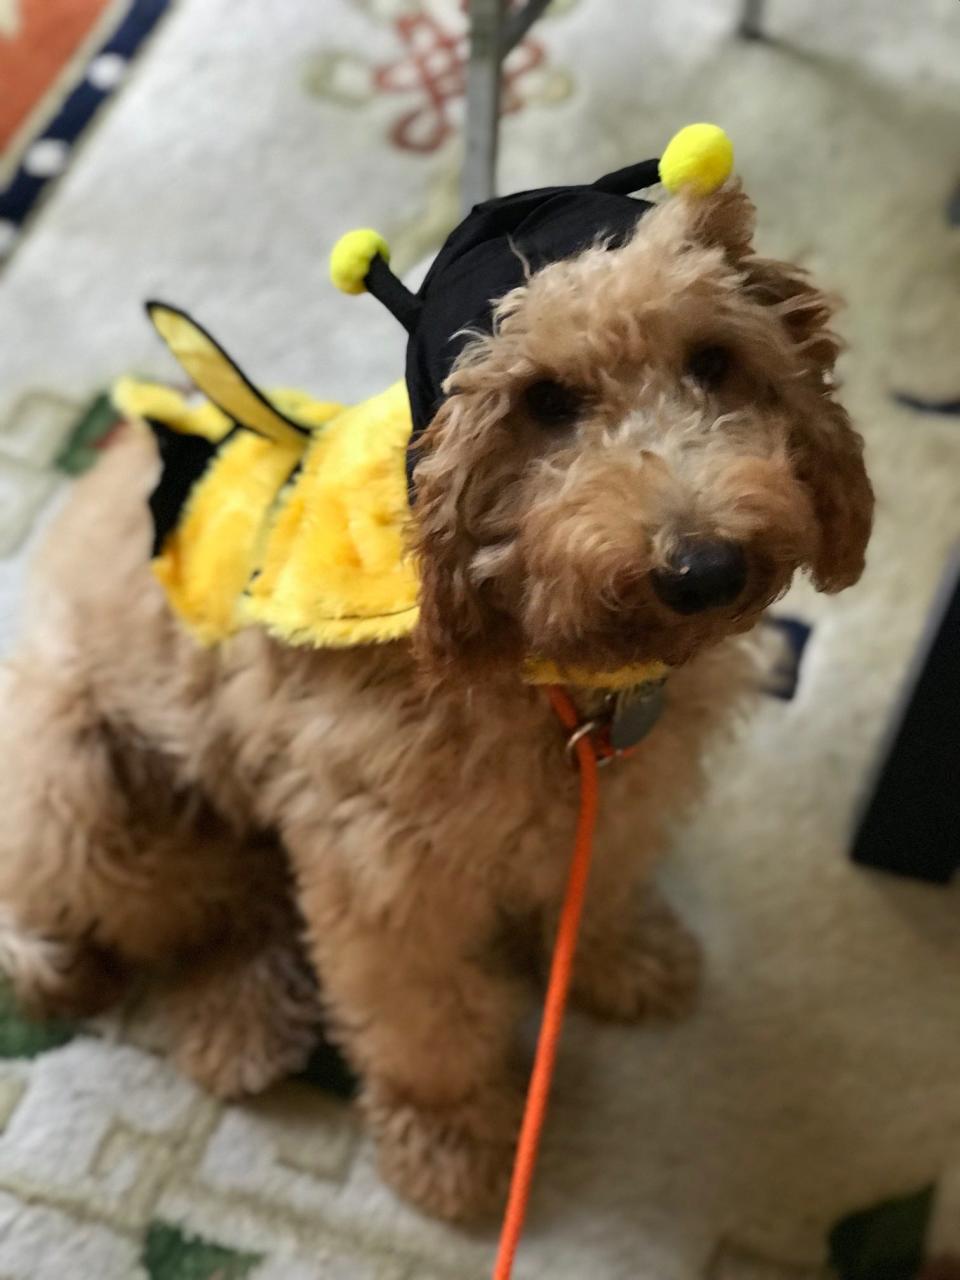 A bumblebee on a leash!